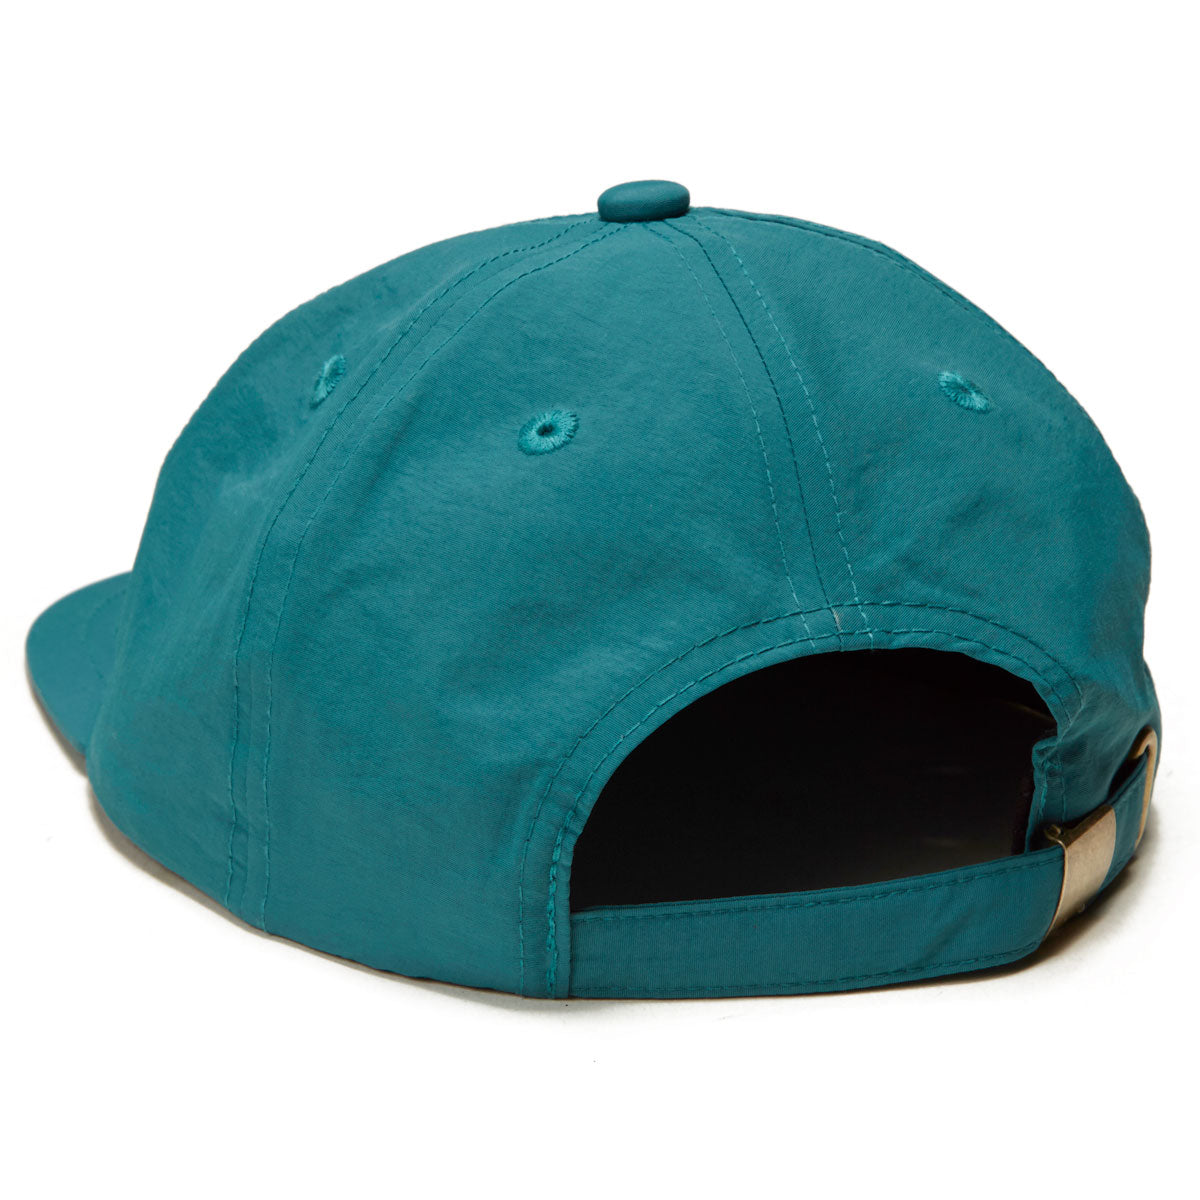 Autumn Nylon Strapback Hat - Teal image 2